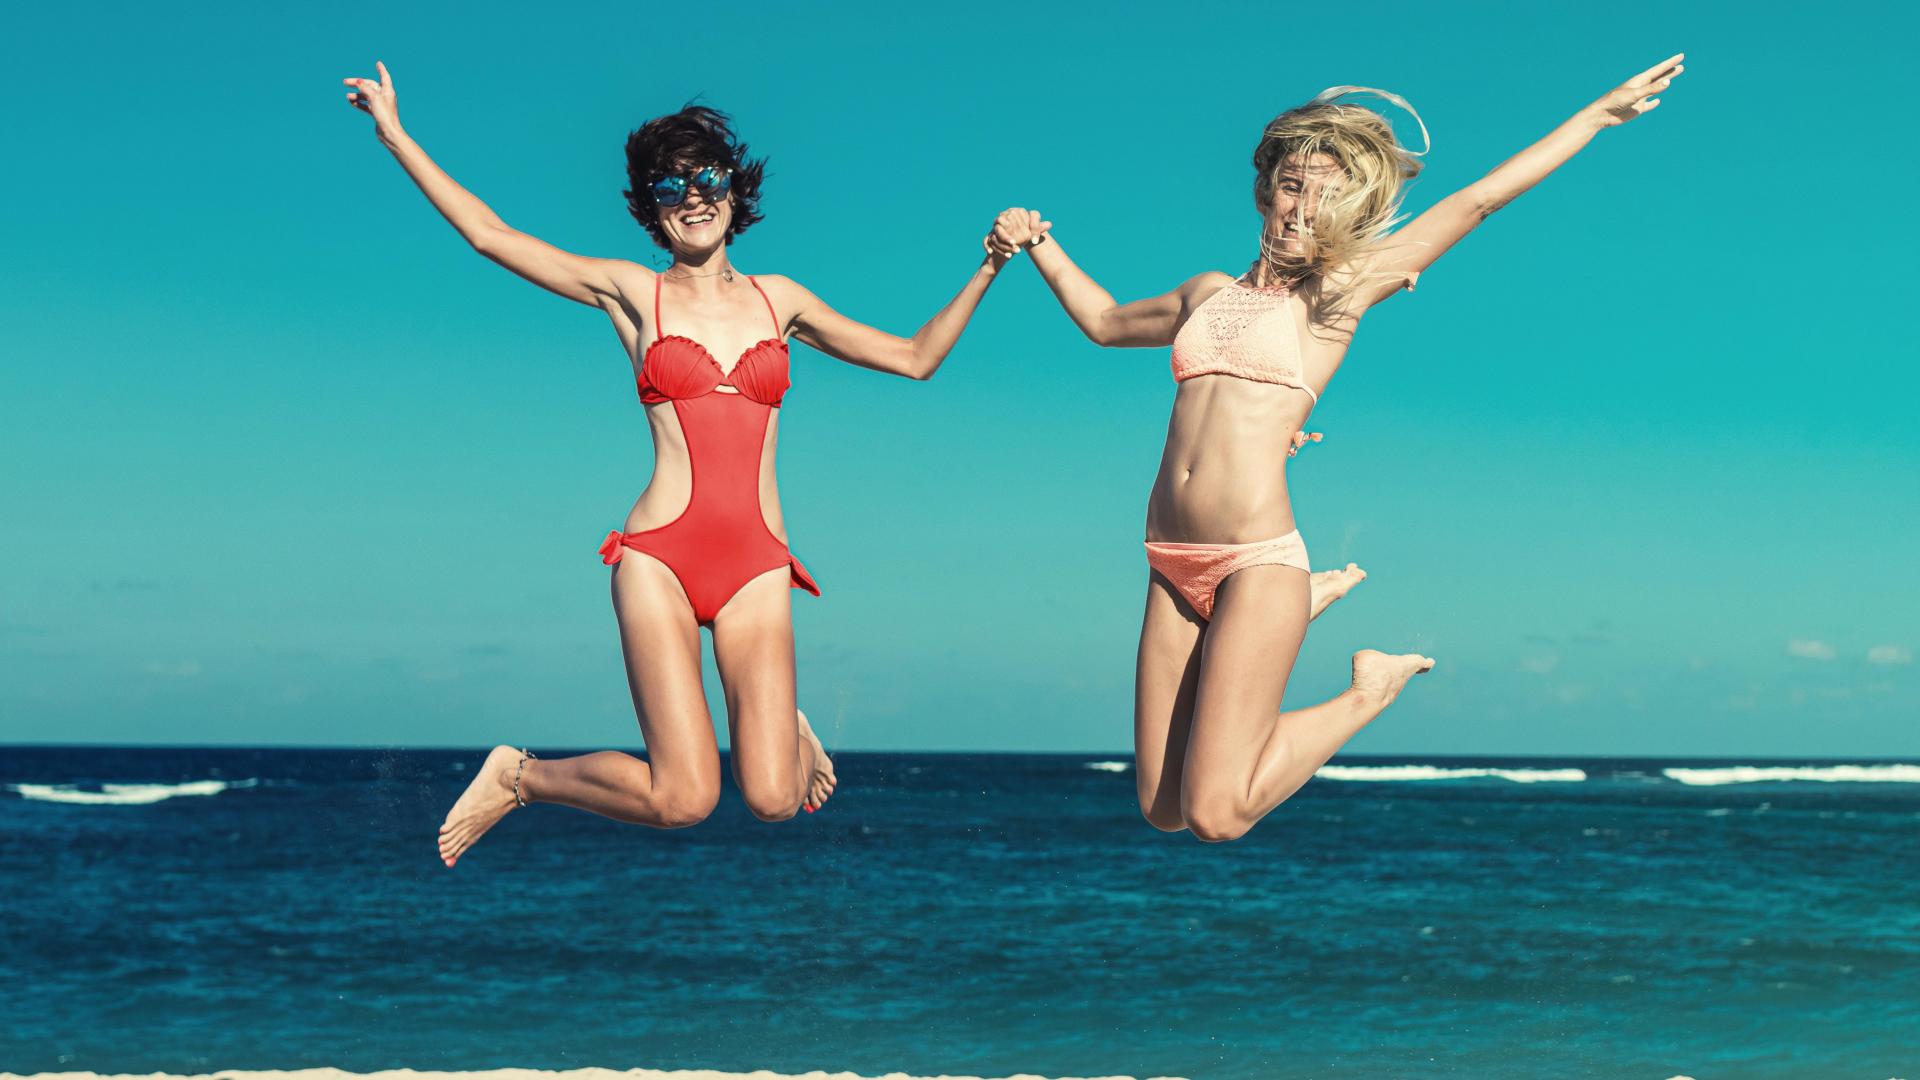 Zwei Freundinnen springen vergnügt hoch am Strand